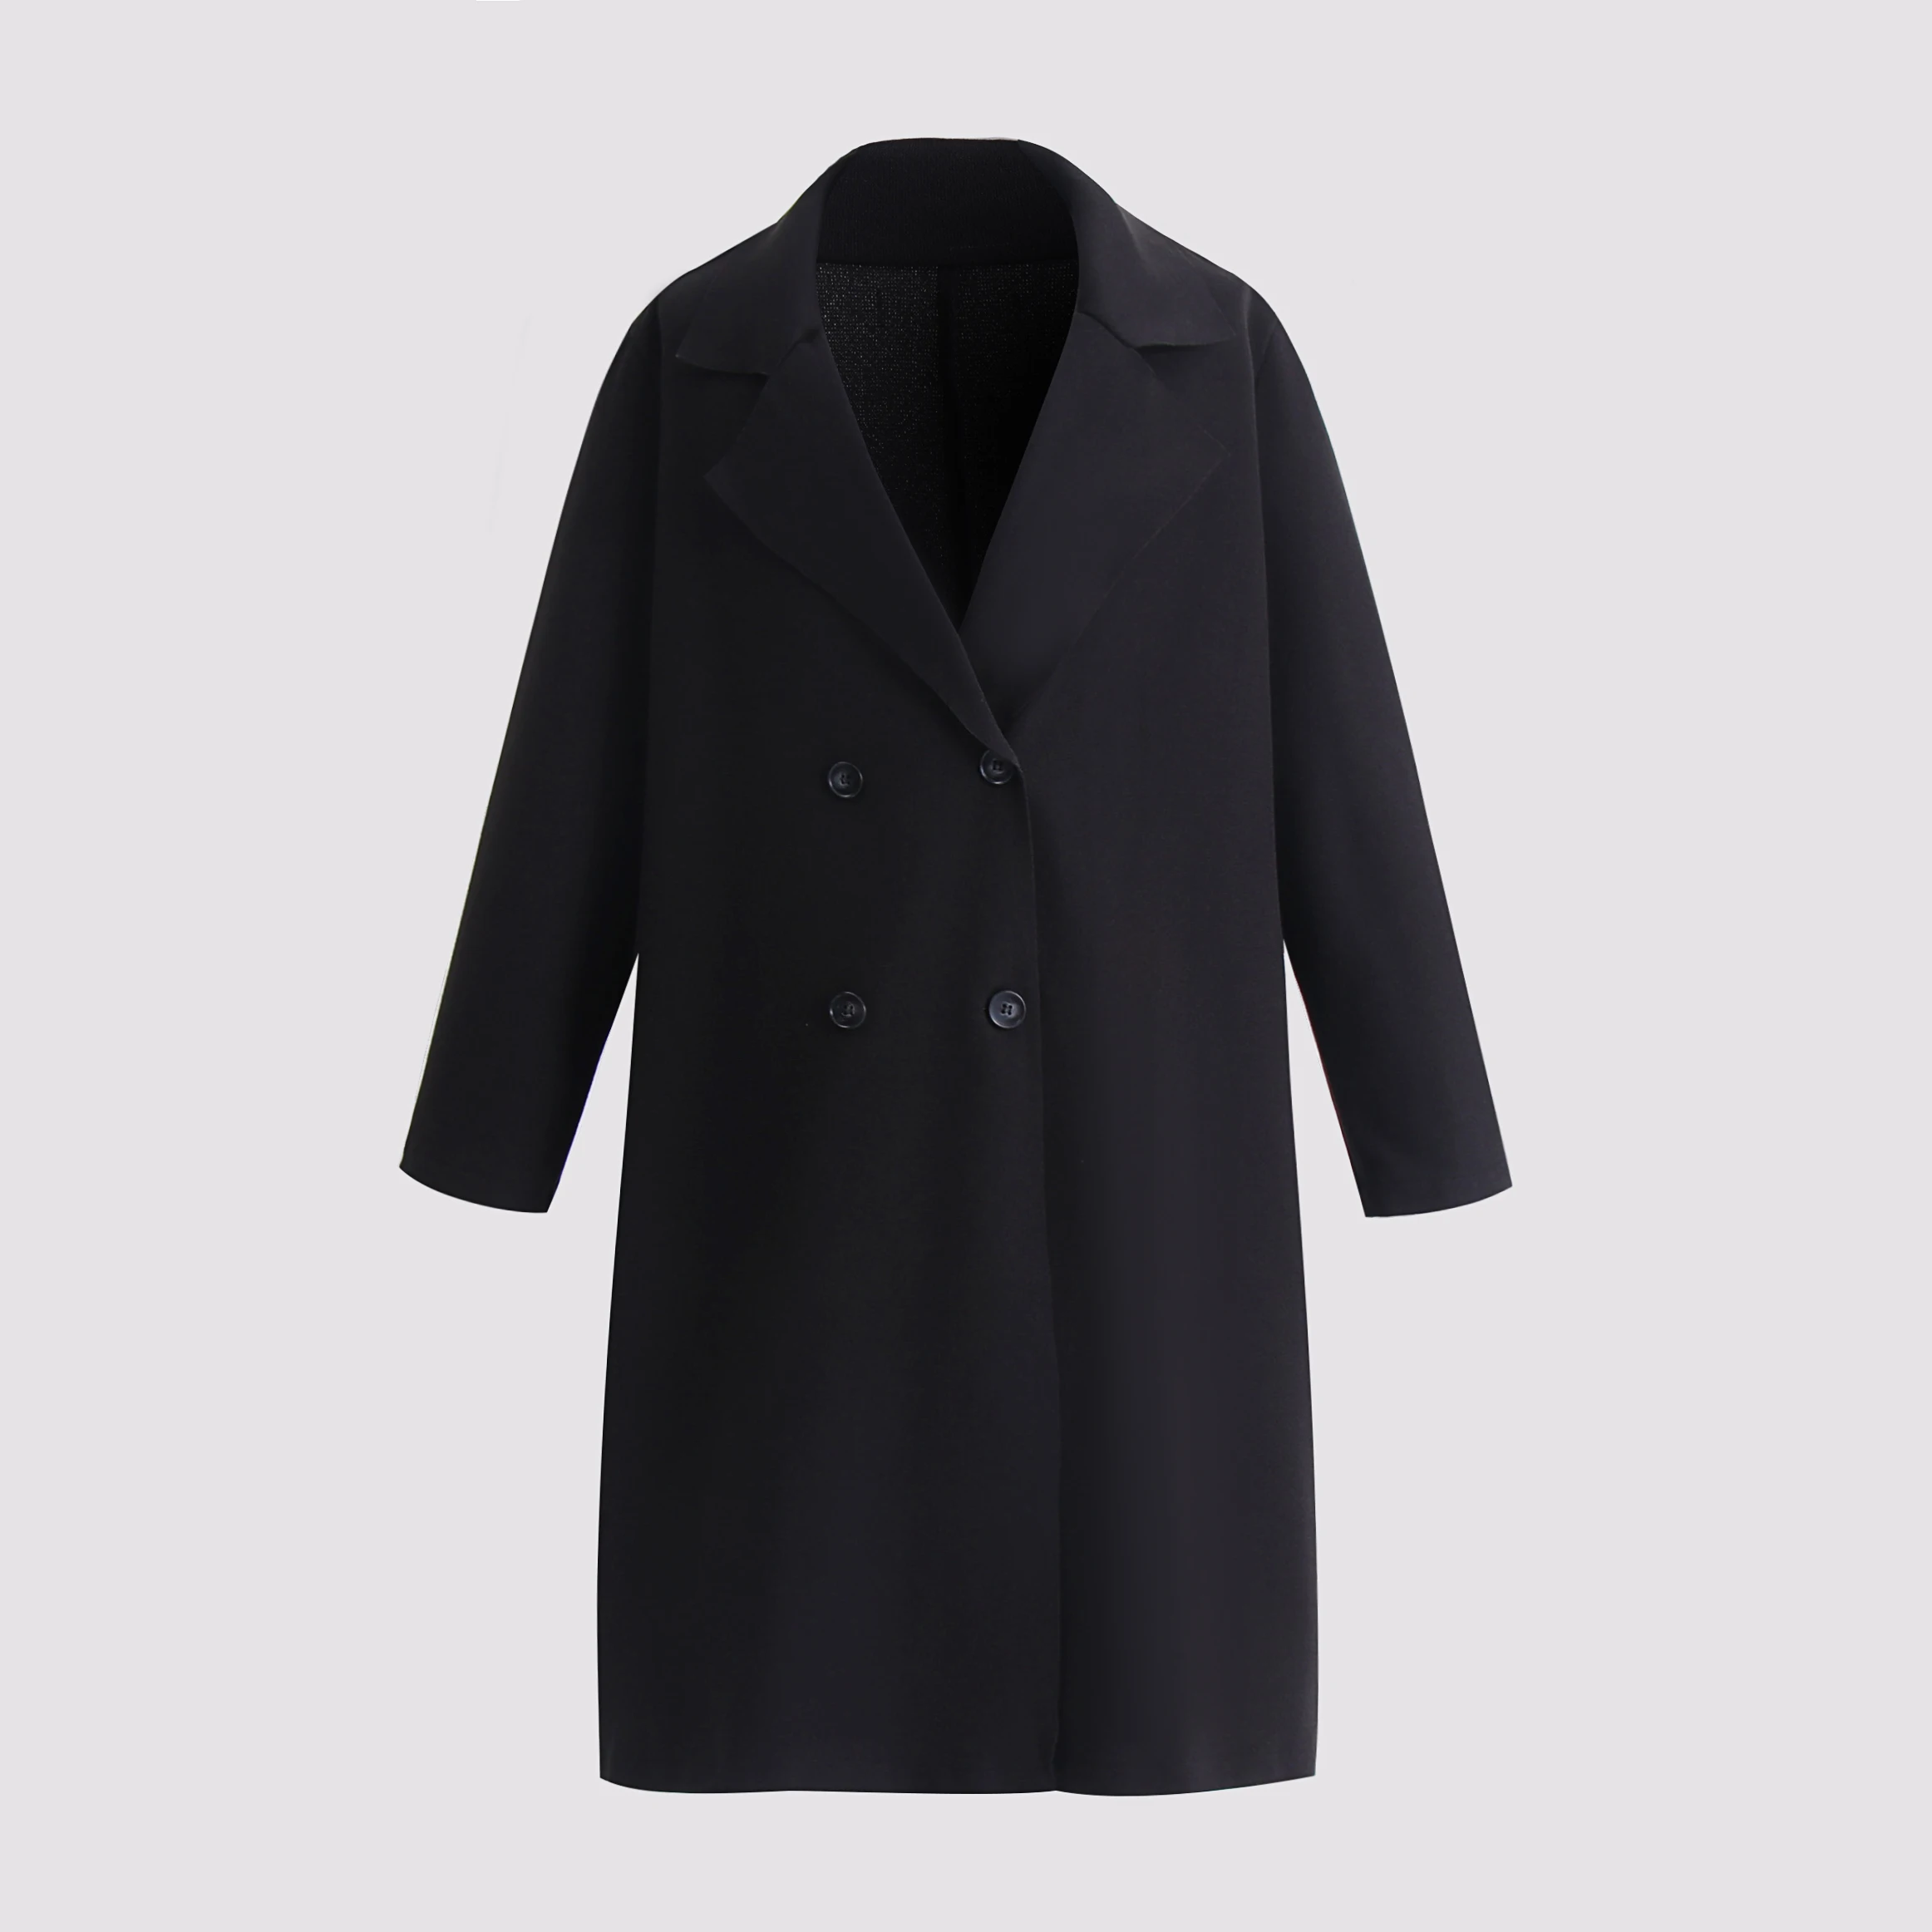 Plus Size 4xl Winter Autumn Coats for Chubby Women 2022 Black Overcoat Turn-down Collar Button Elegant Vintage Long Outerwear